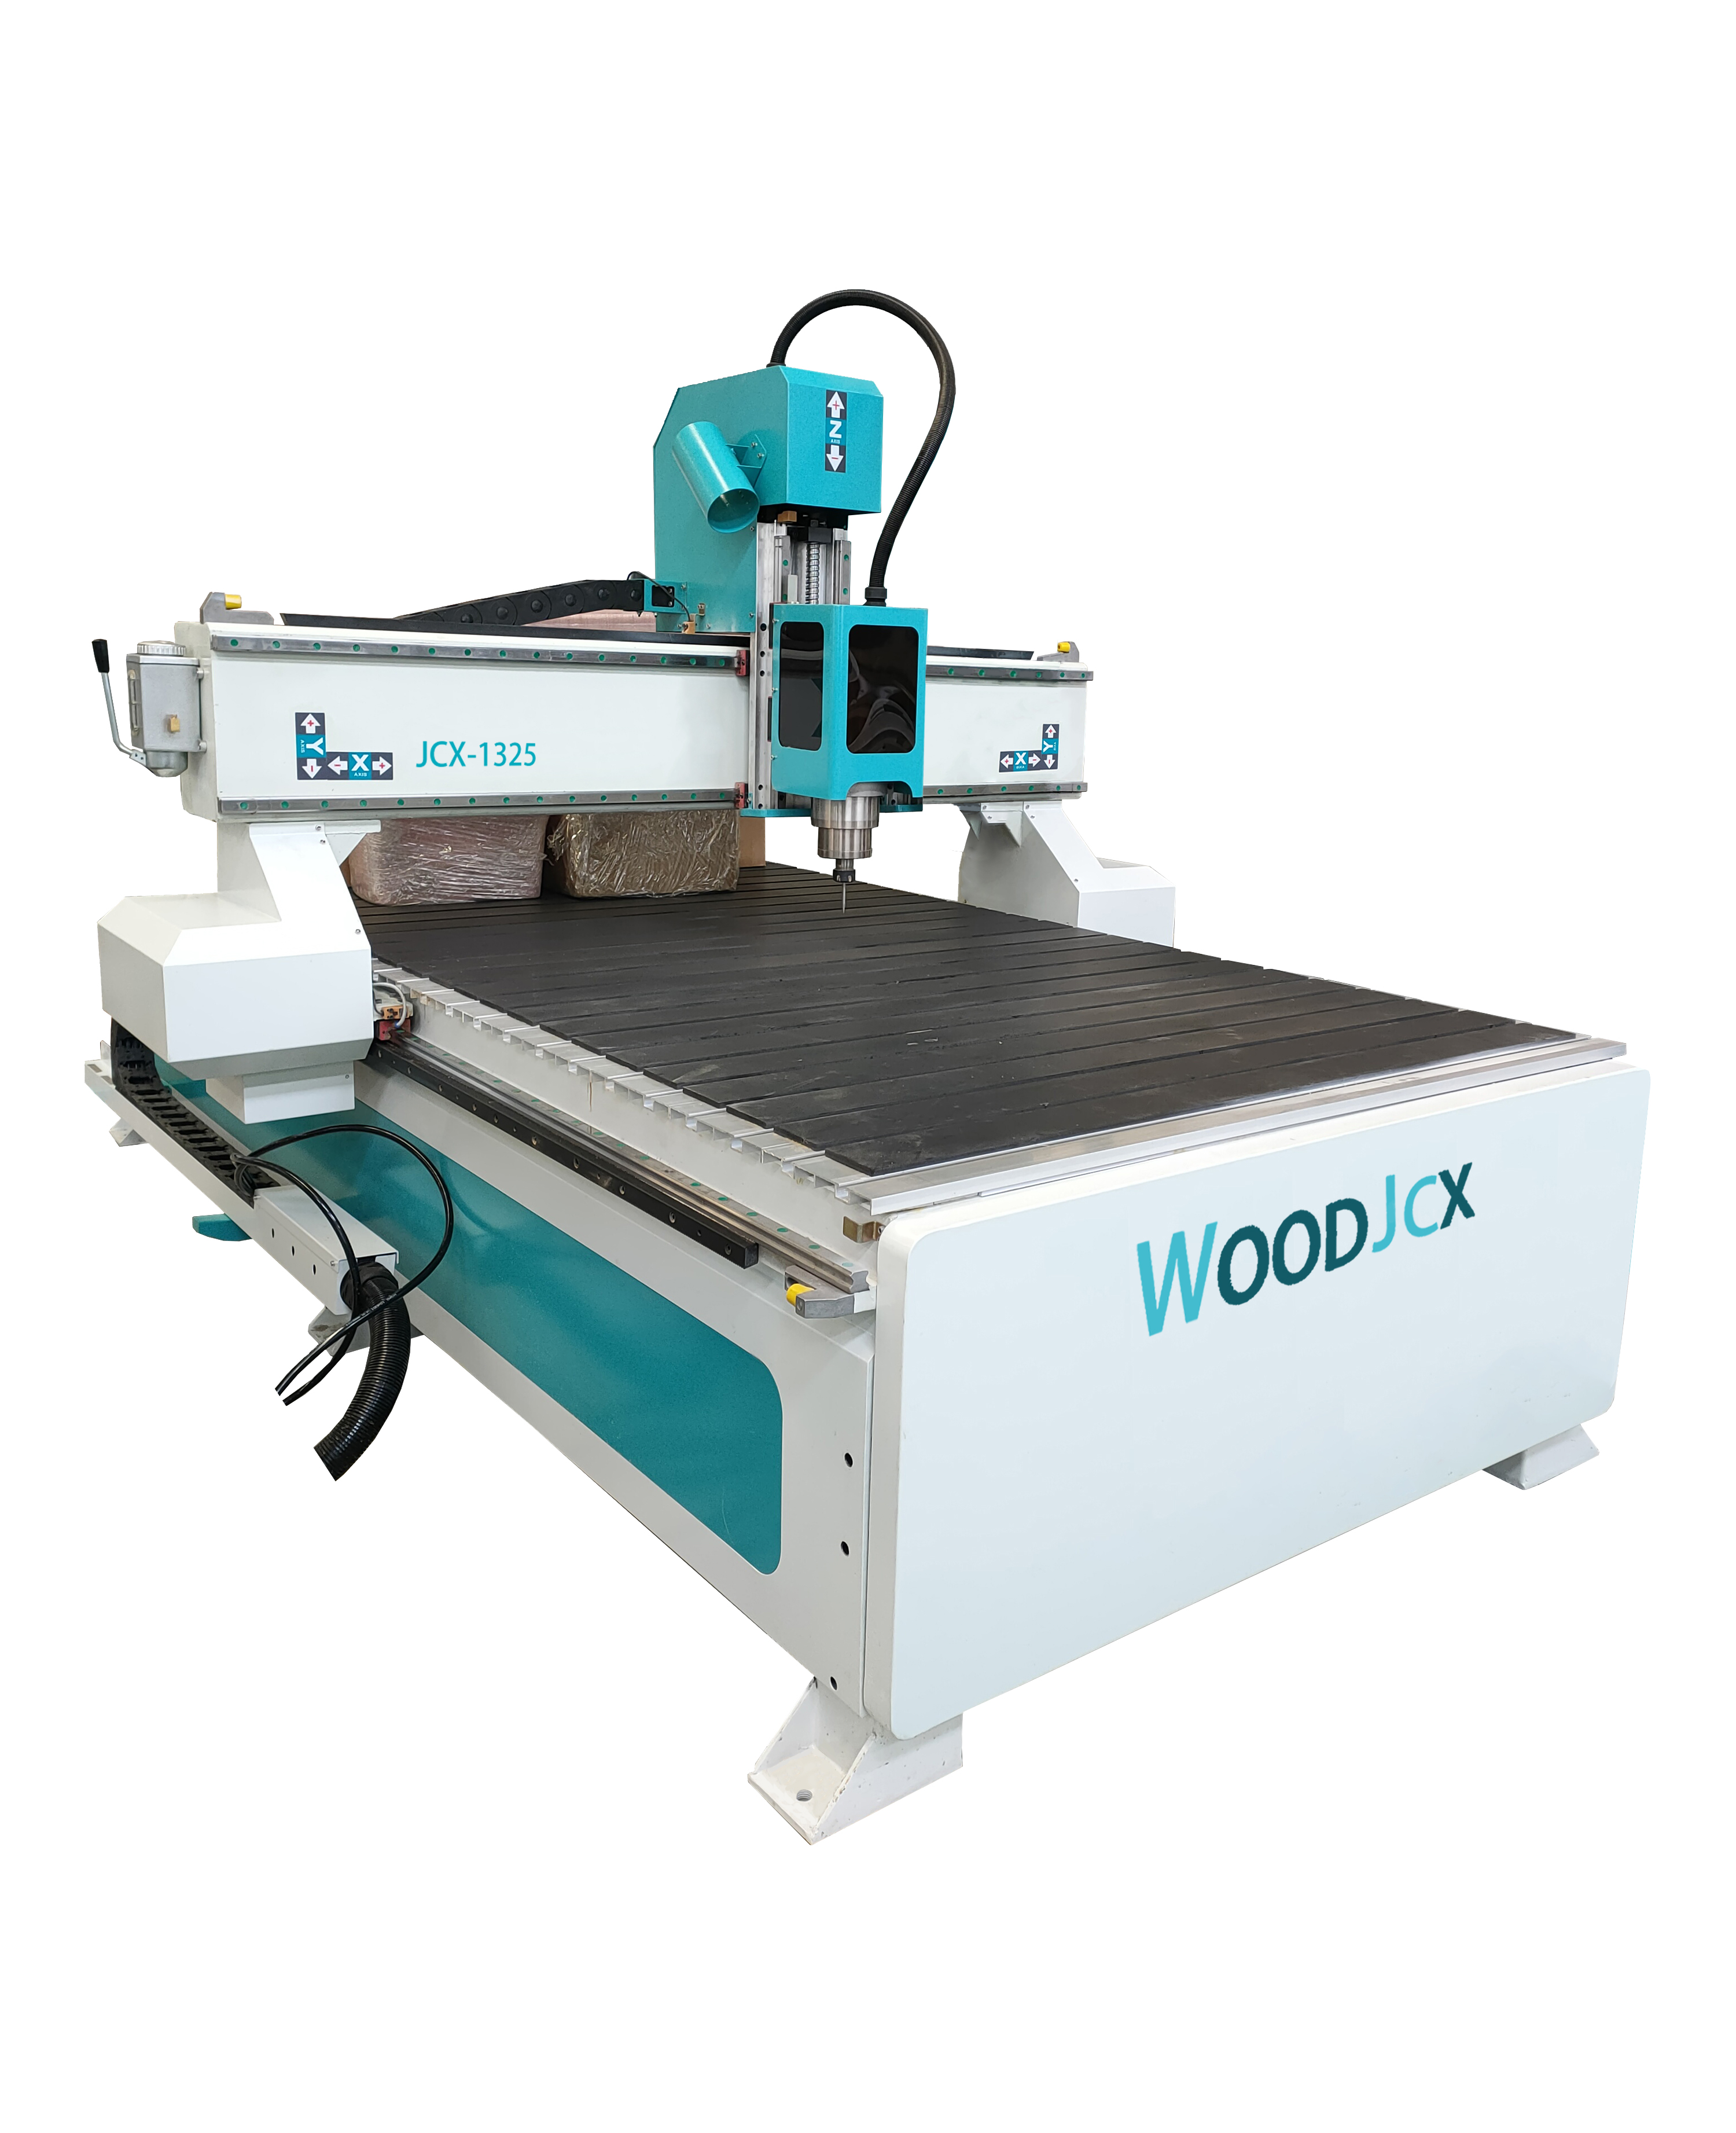 JCX-1325 CNC Woodworking Engraving Cutting machine 